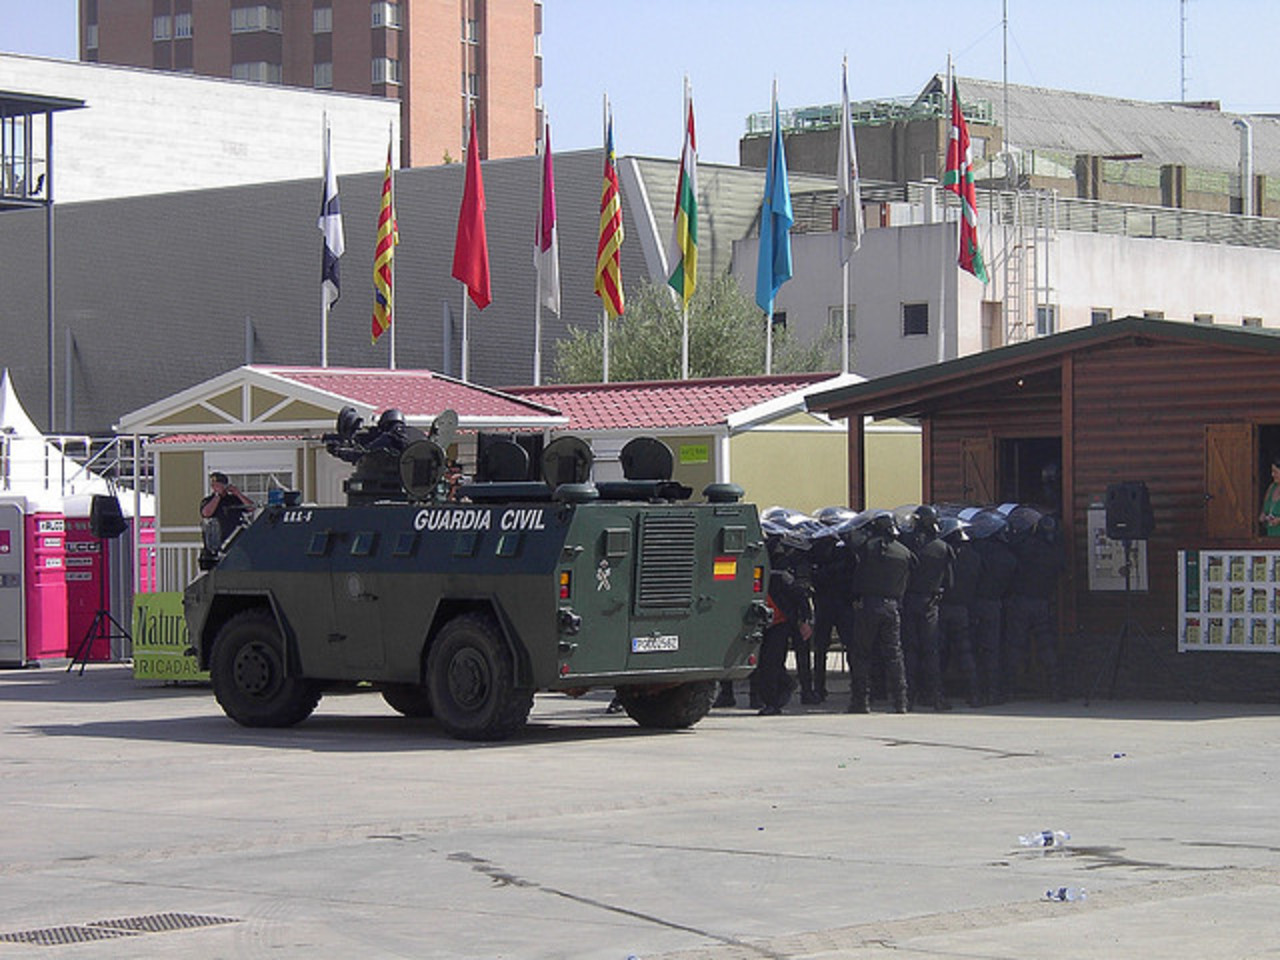 Pegaso BLR 600 4x4 Guardia Civil GRS | Flickr - Photo Sharing!